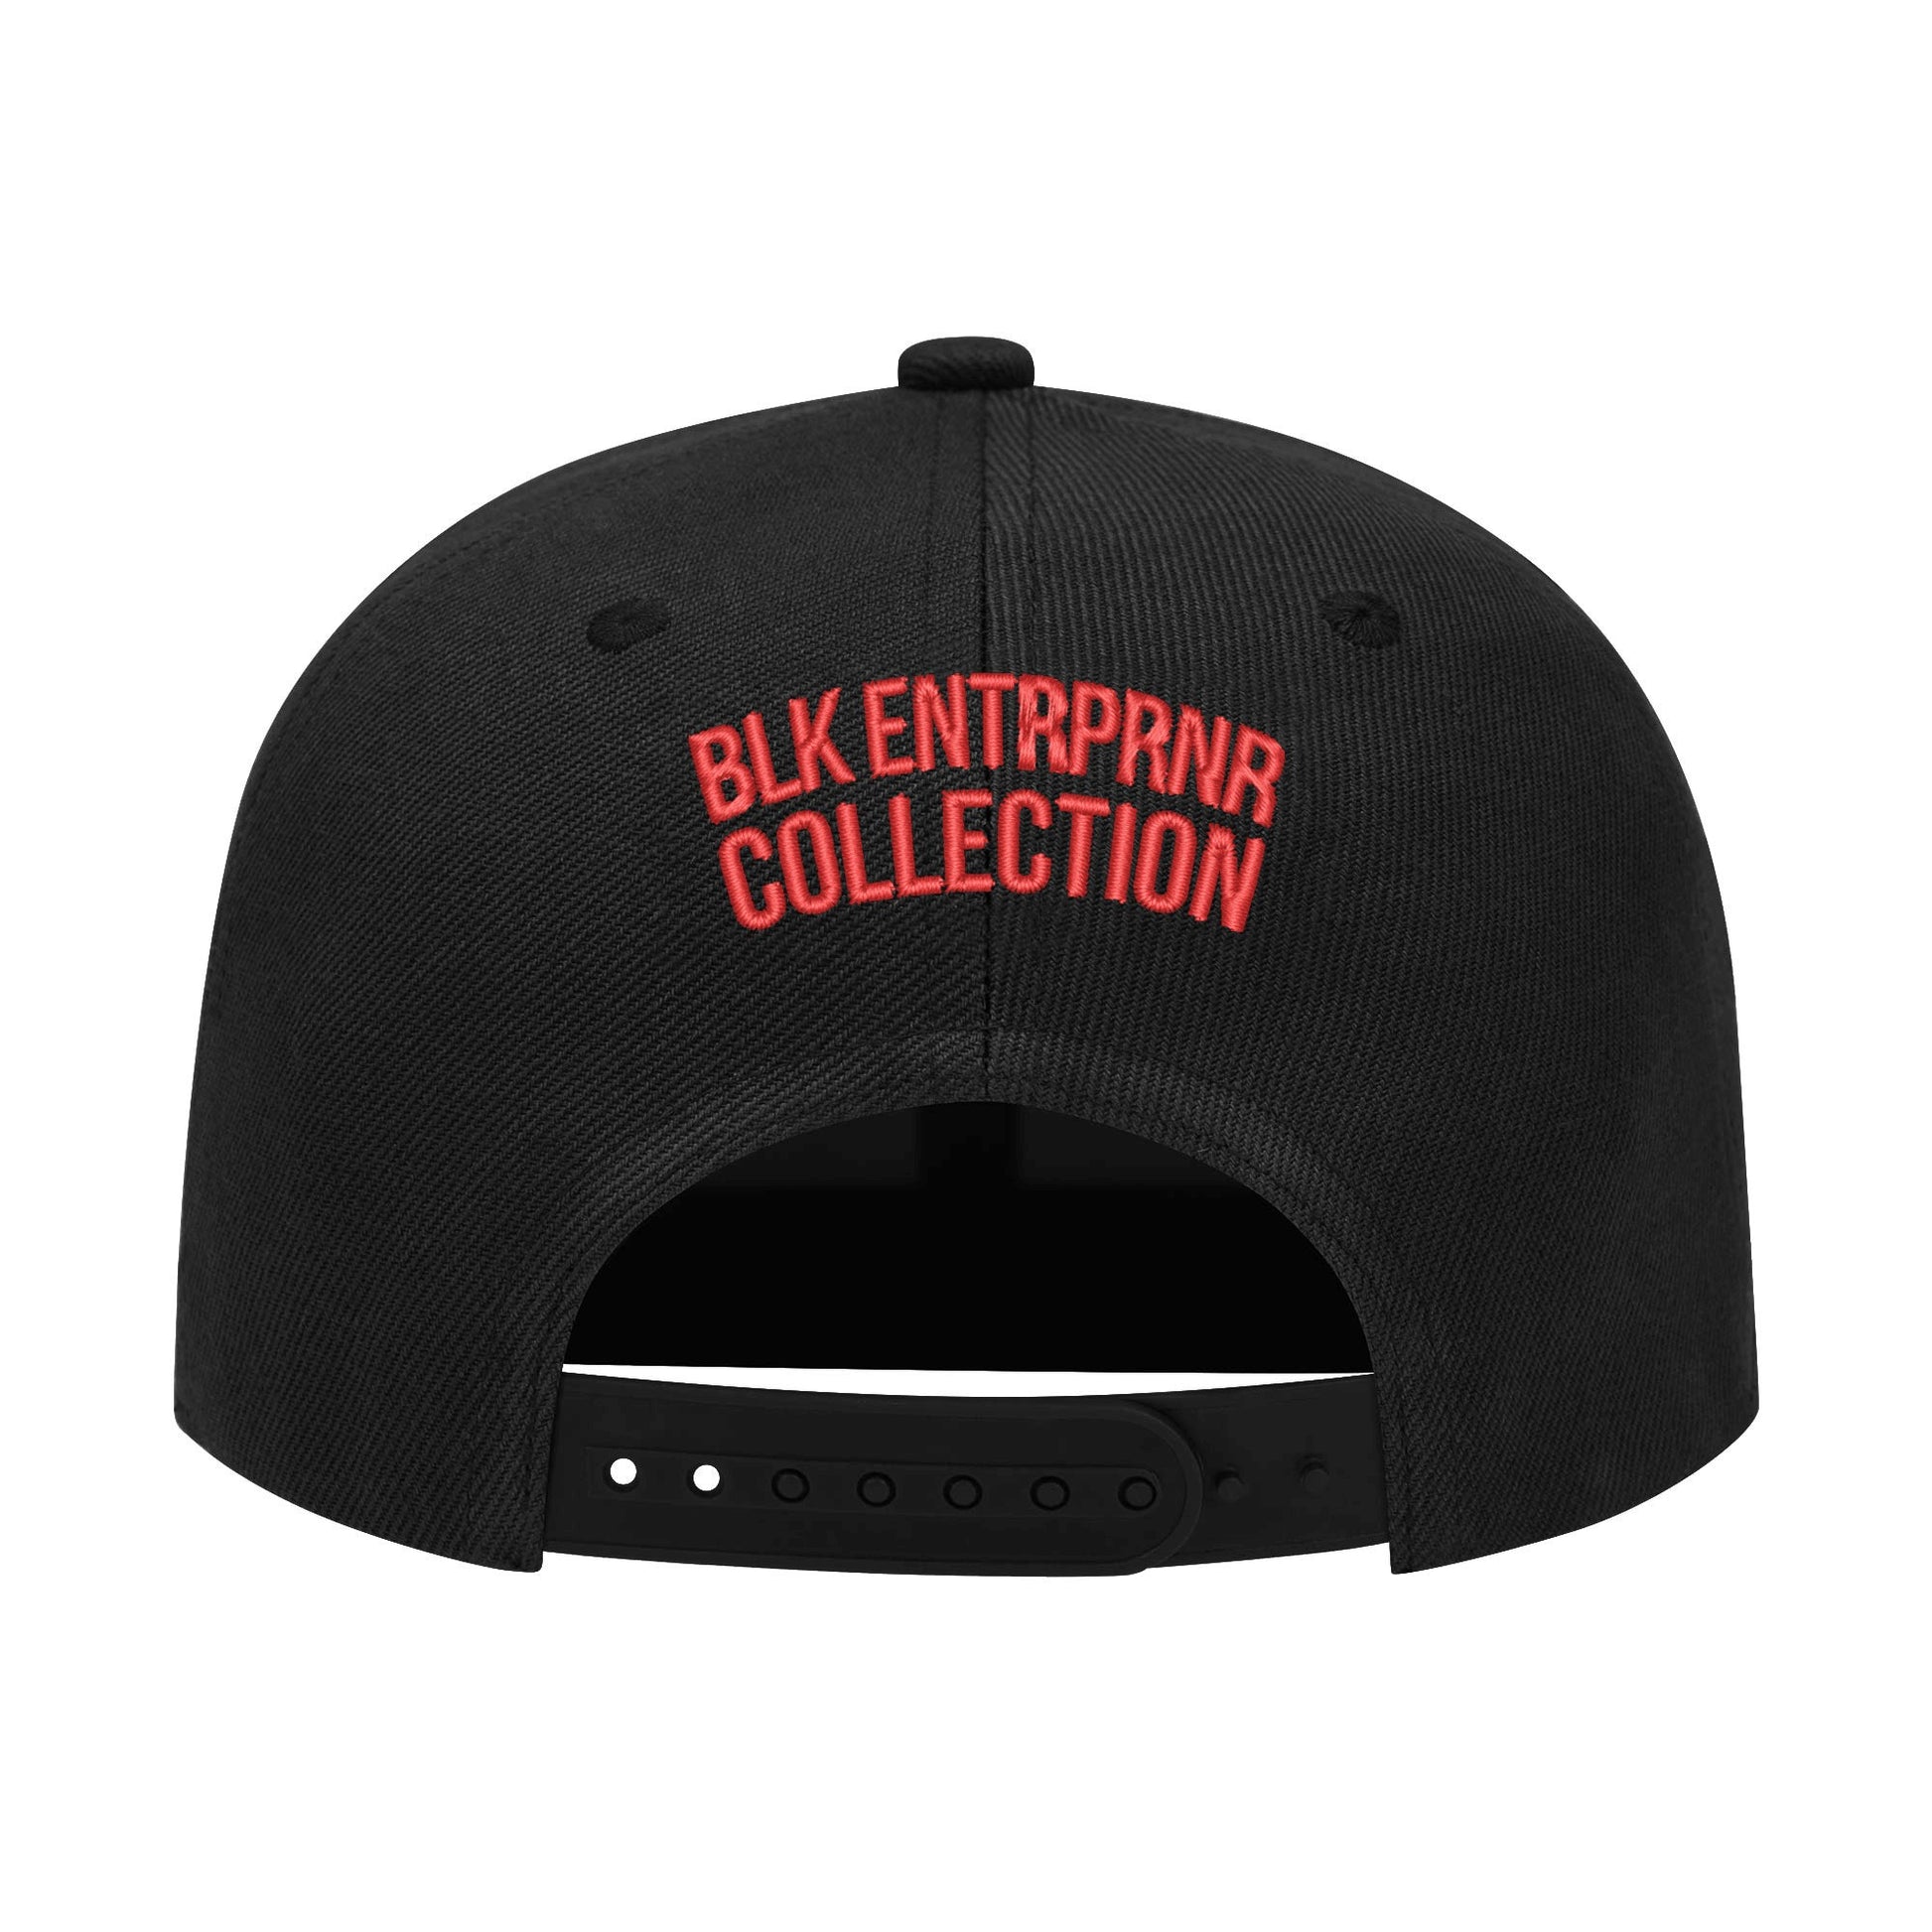 Black Entrepreneur Collection's Signature Crown RBG Embroidered Snapback